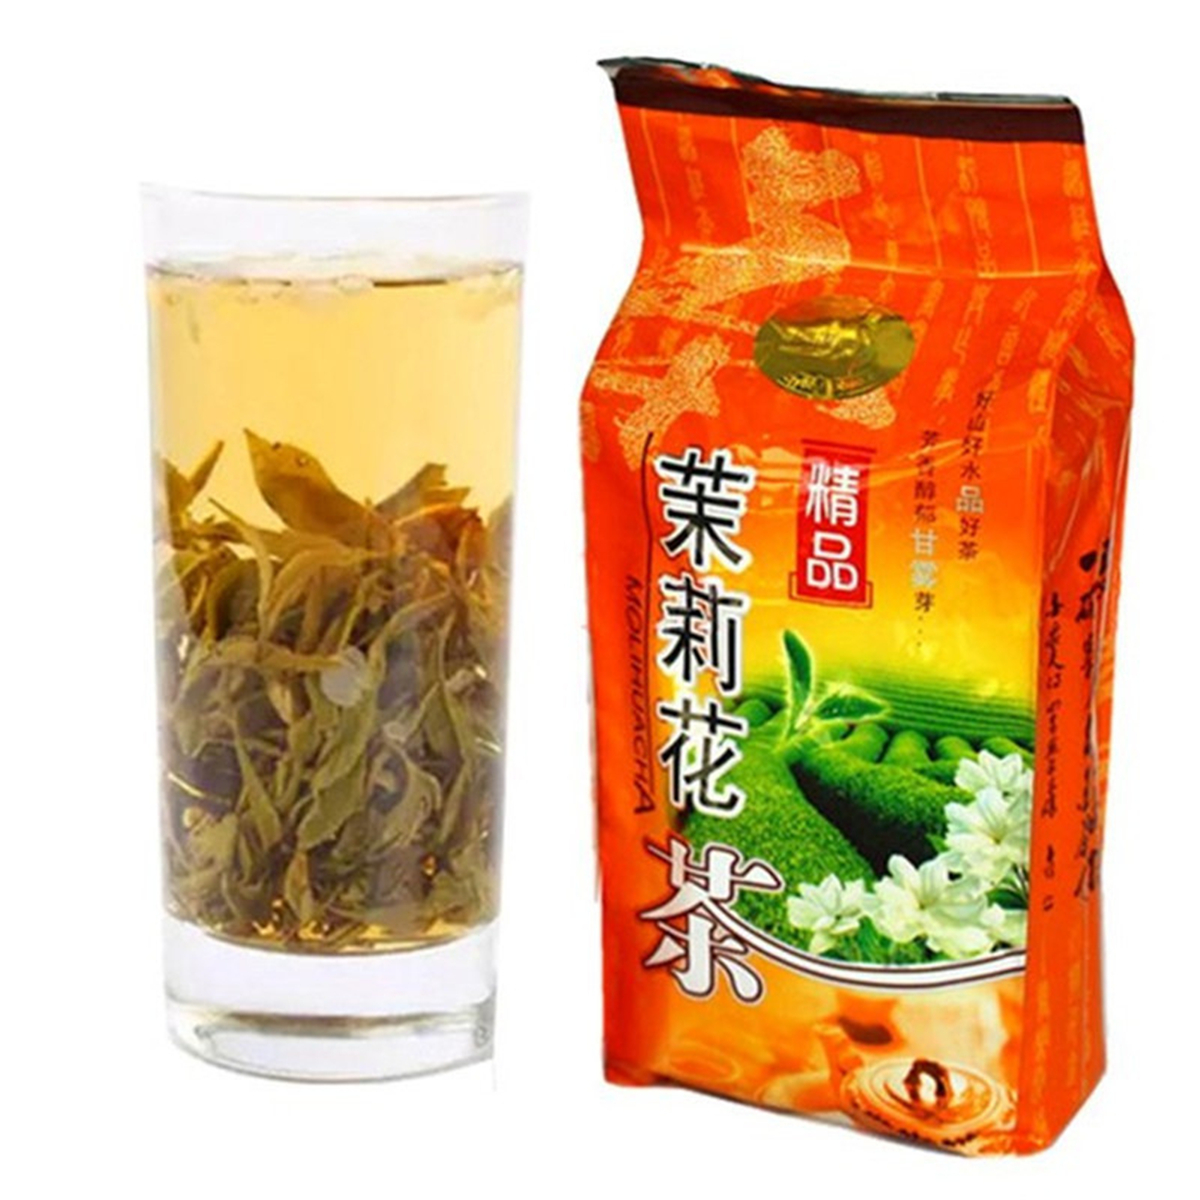 C-LC025 spring Organic Jasmine tea 250g Freshest Organic Food Green Tea flower teas Health Care